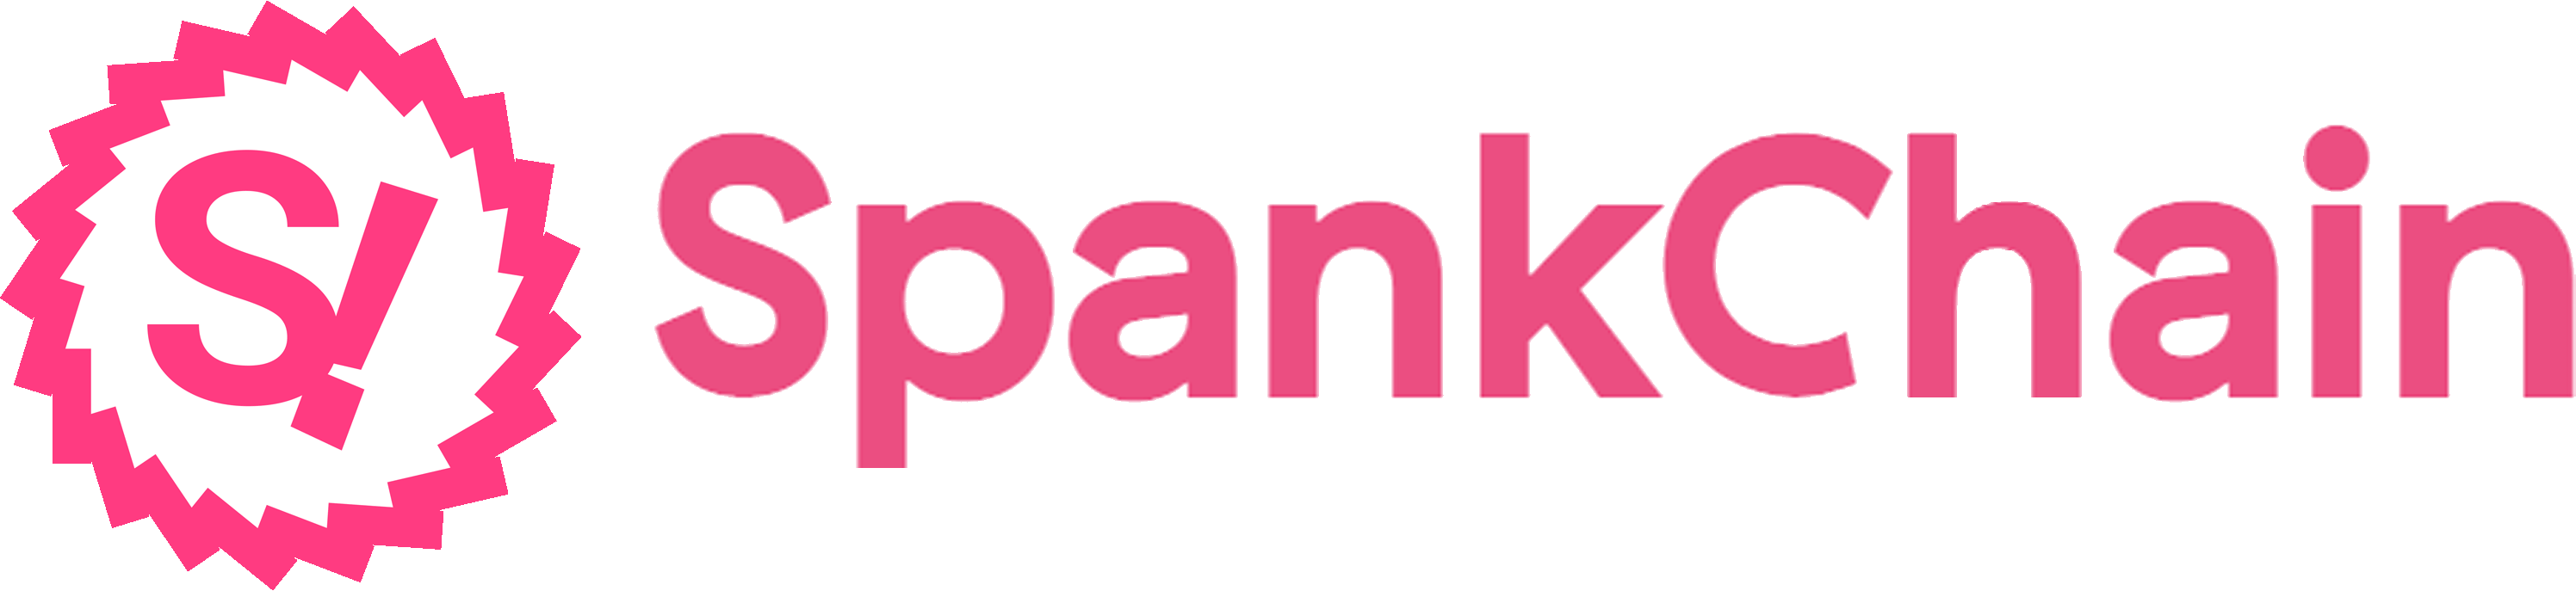 SpankChain | Lead investor